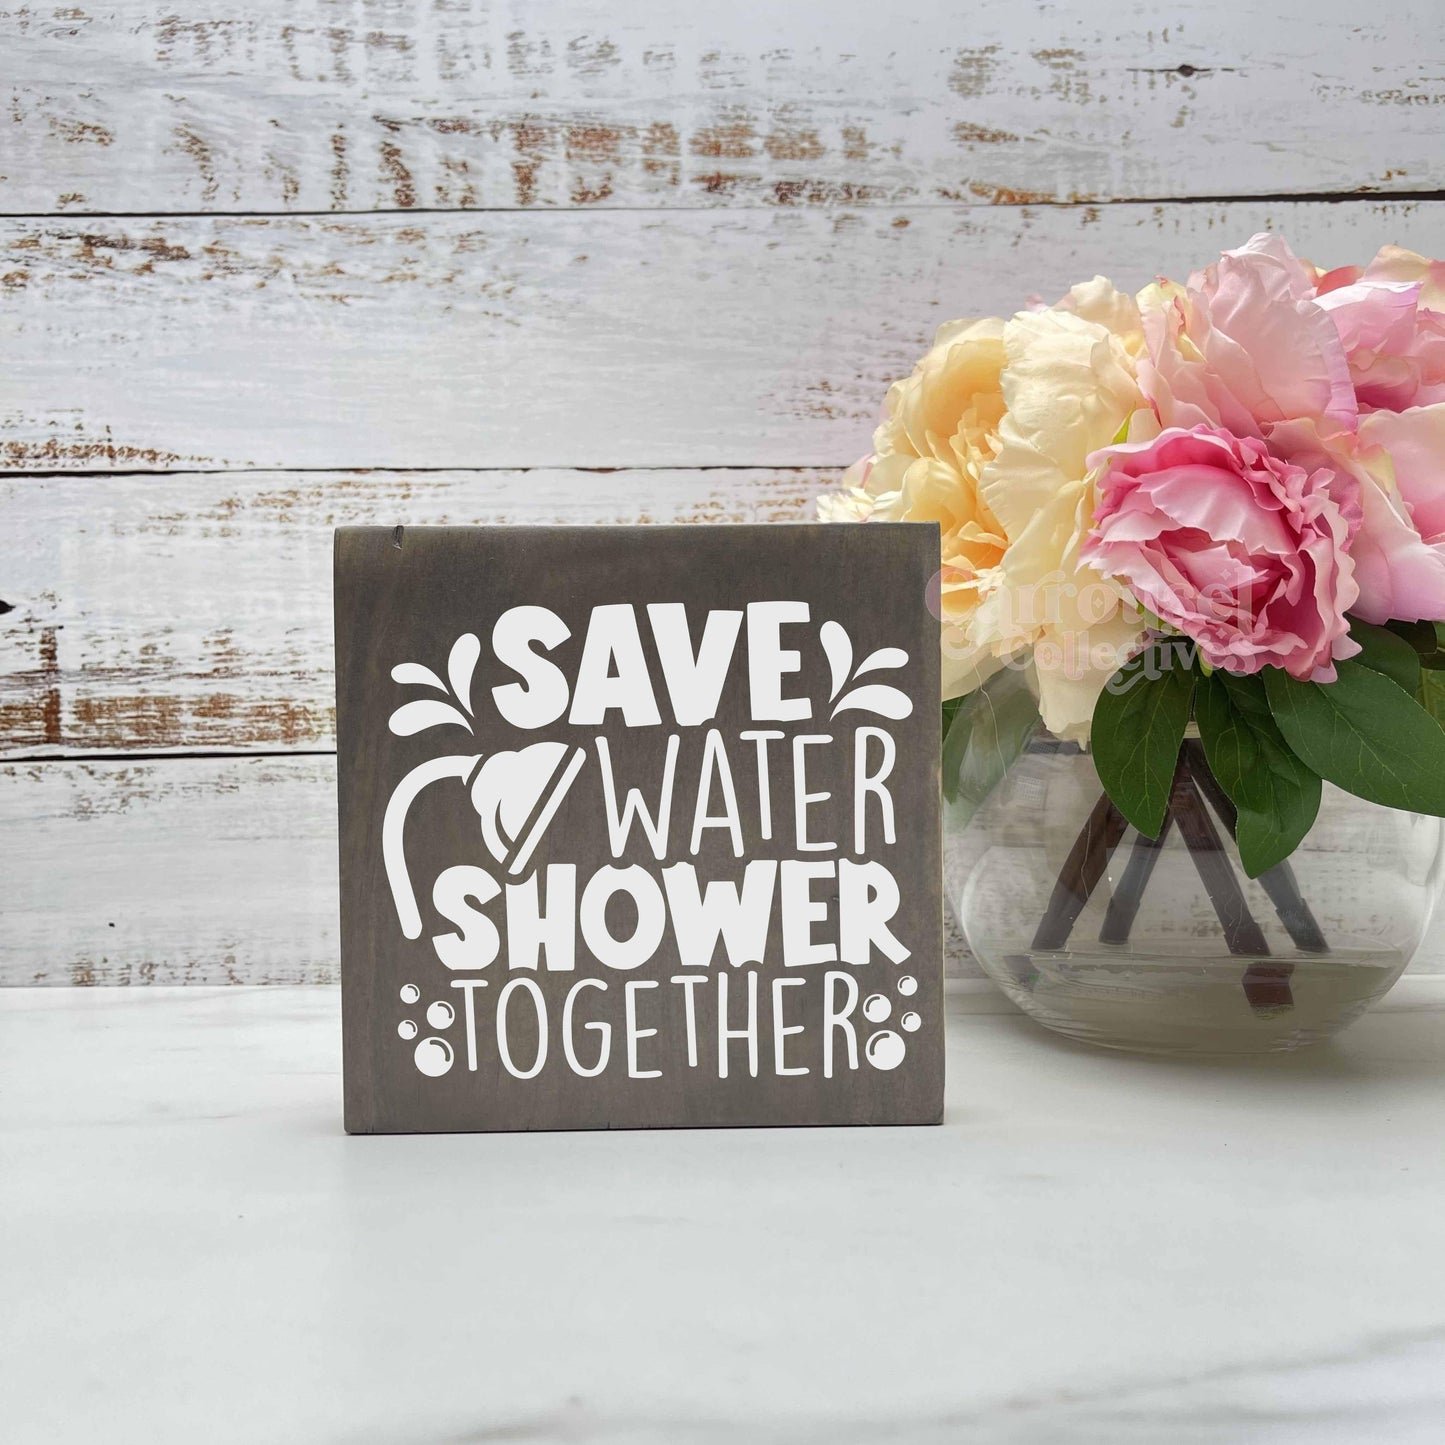 Save water shower together, Bathroom Wood Sign, Bathroom Decor, Home Decor